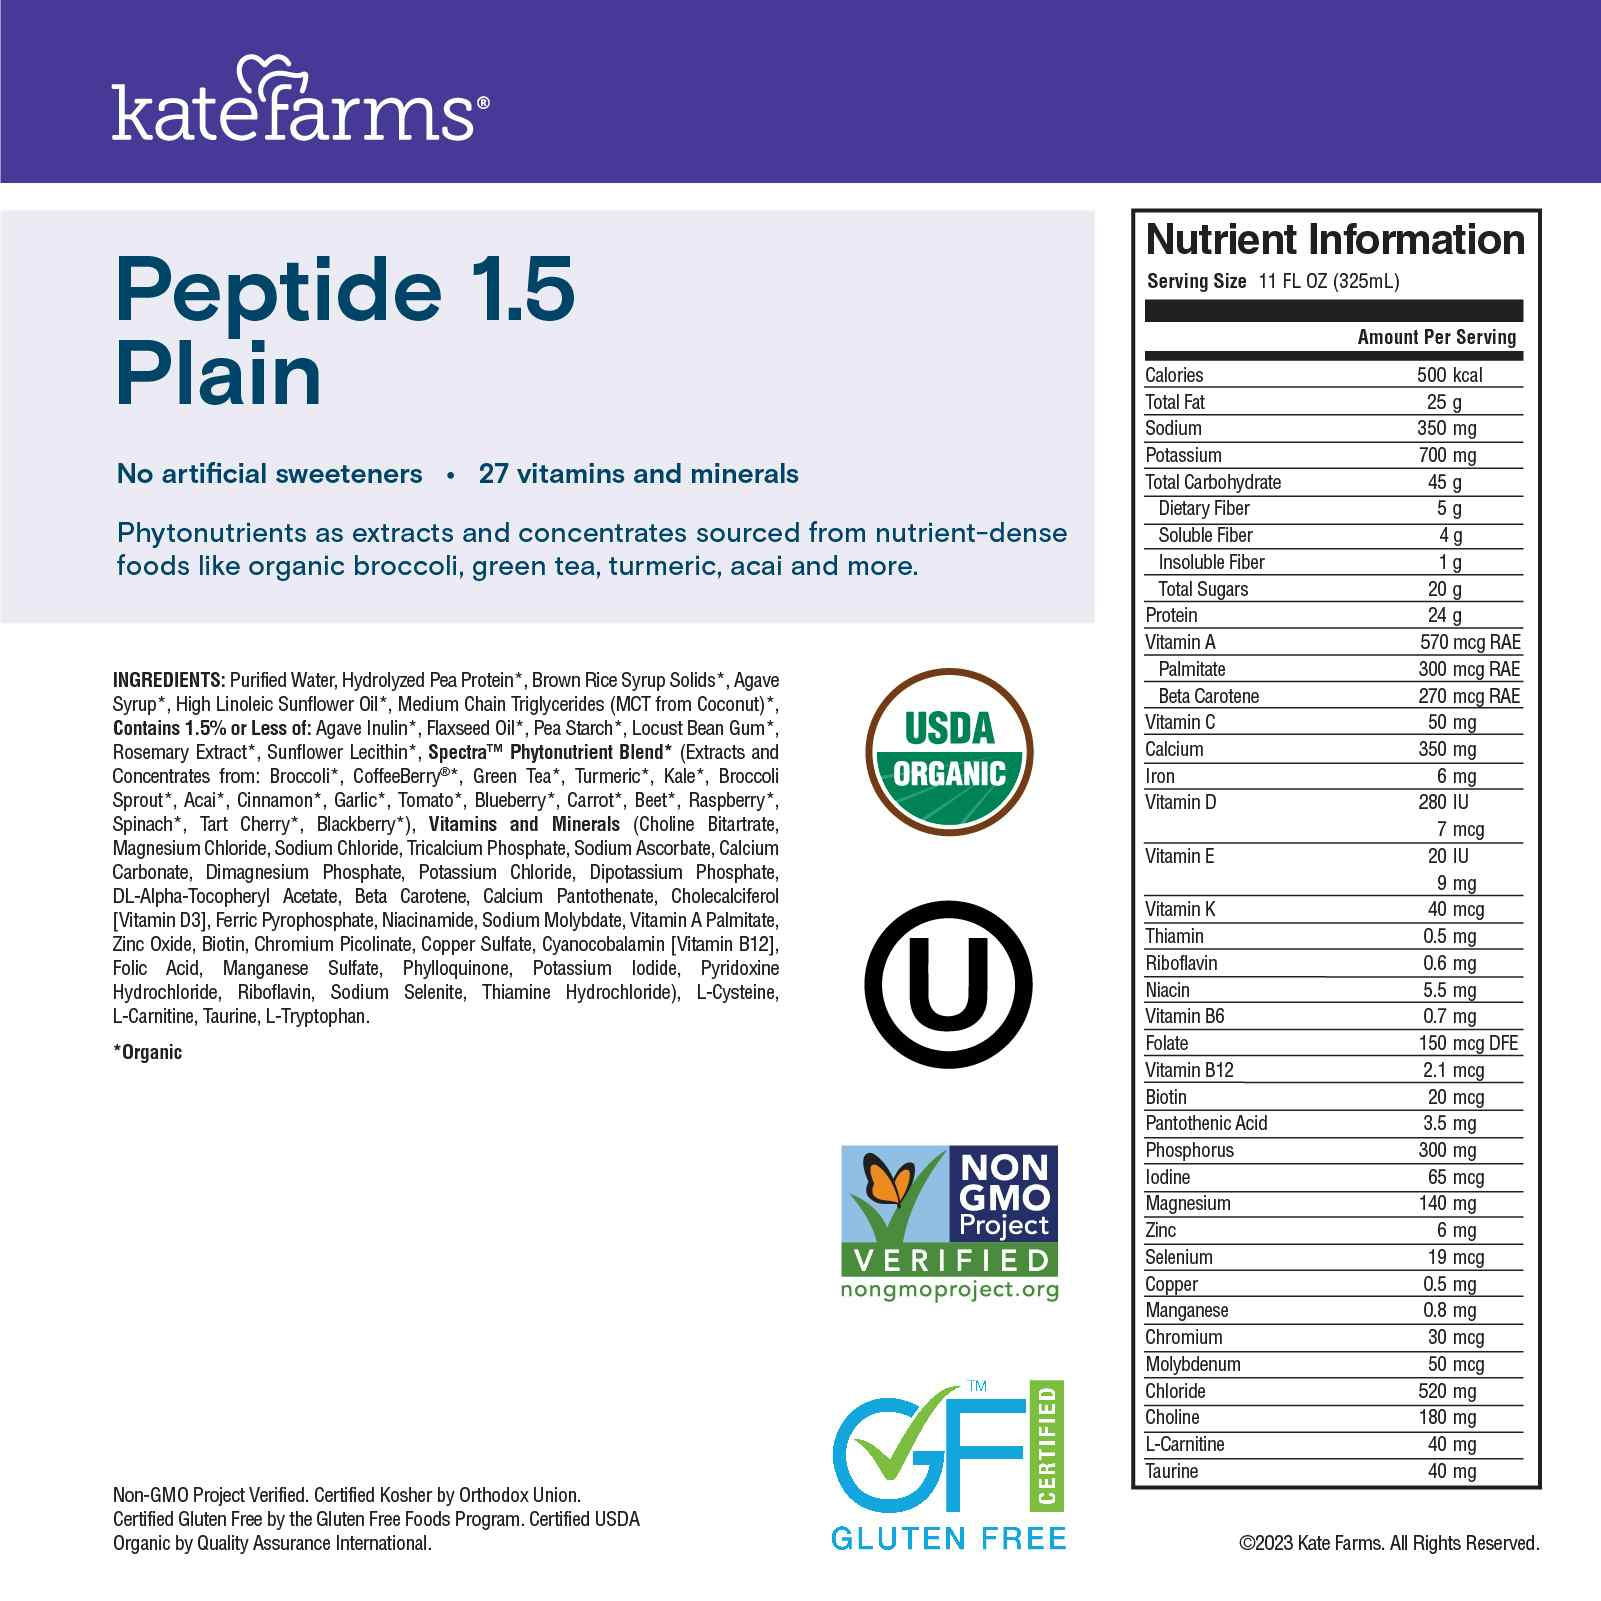 Kate Farms Peptide 1.5 Sole-Source Nutrition Formula, Plain, 11 oz.